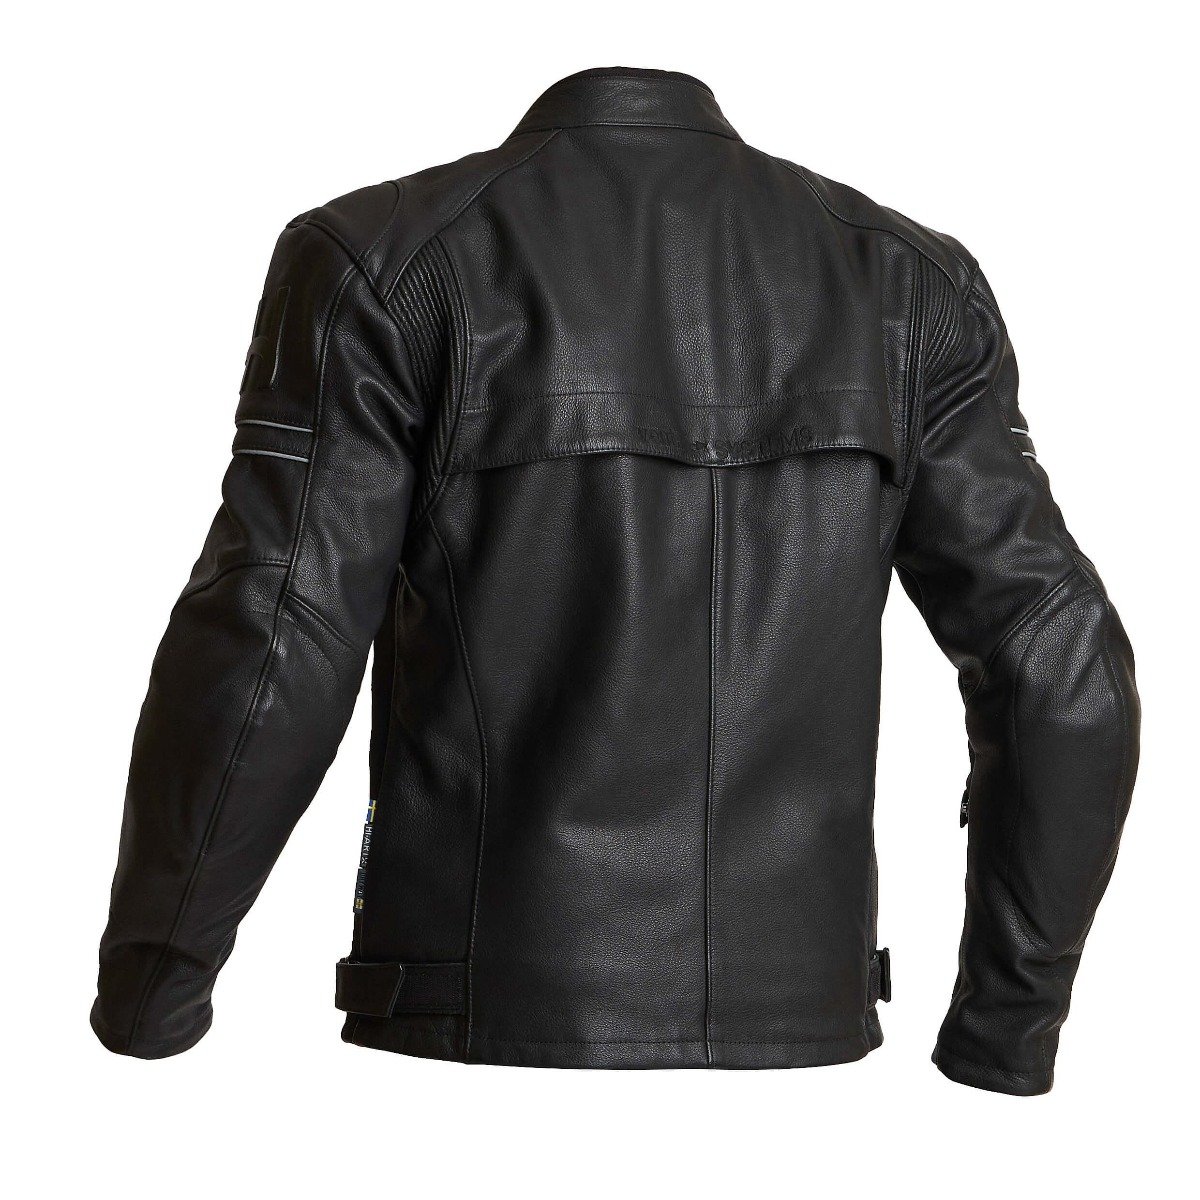 Image of Halvarssons Selja Jacket Black Size 58 EN